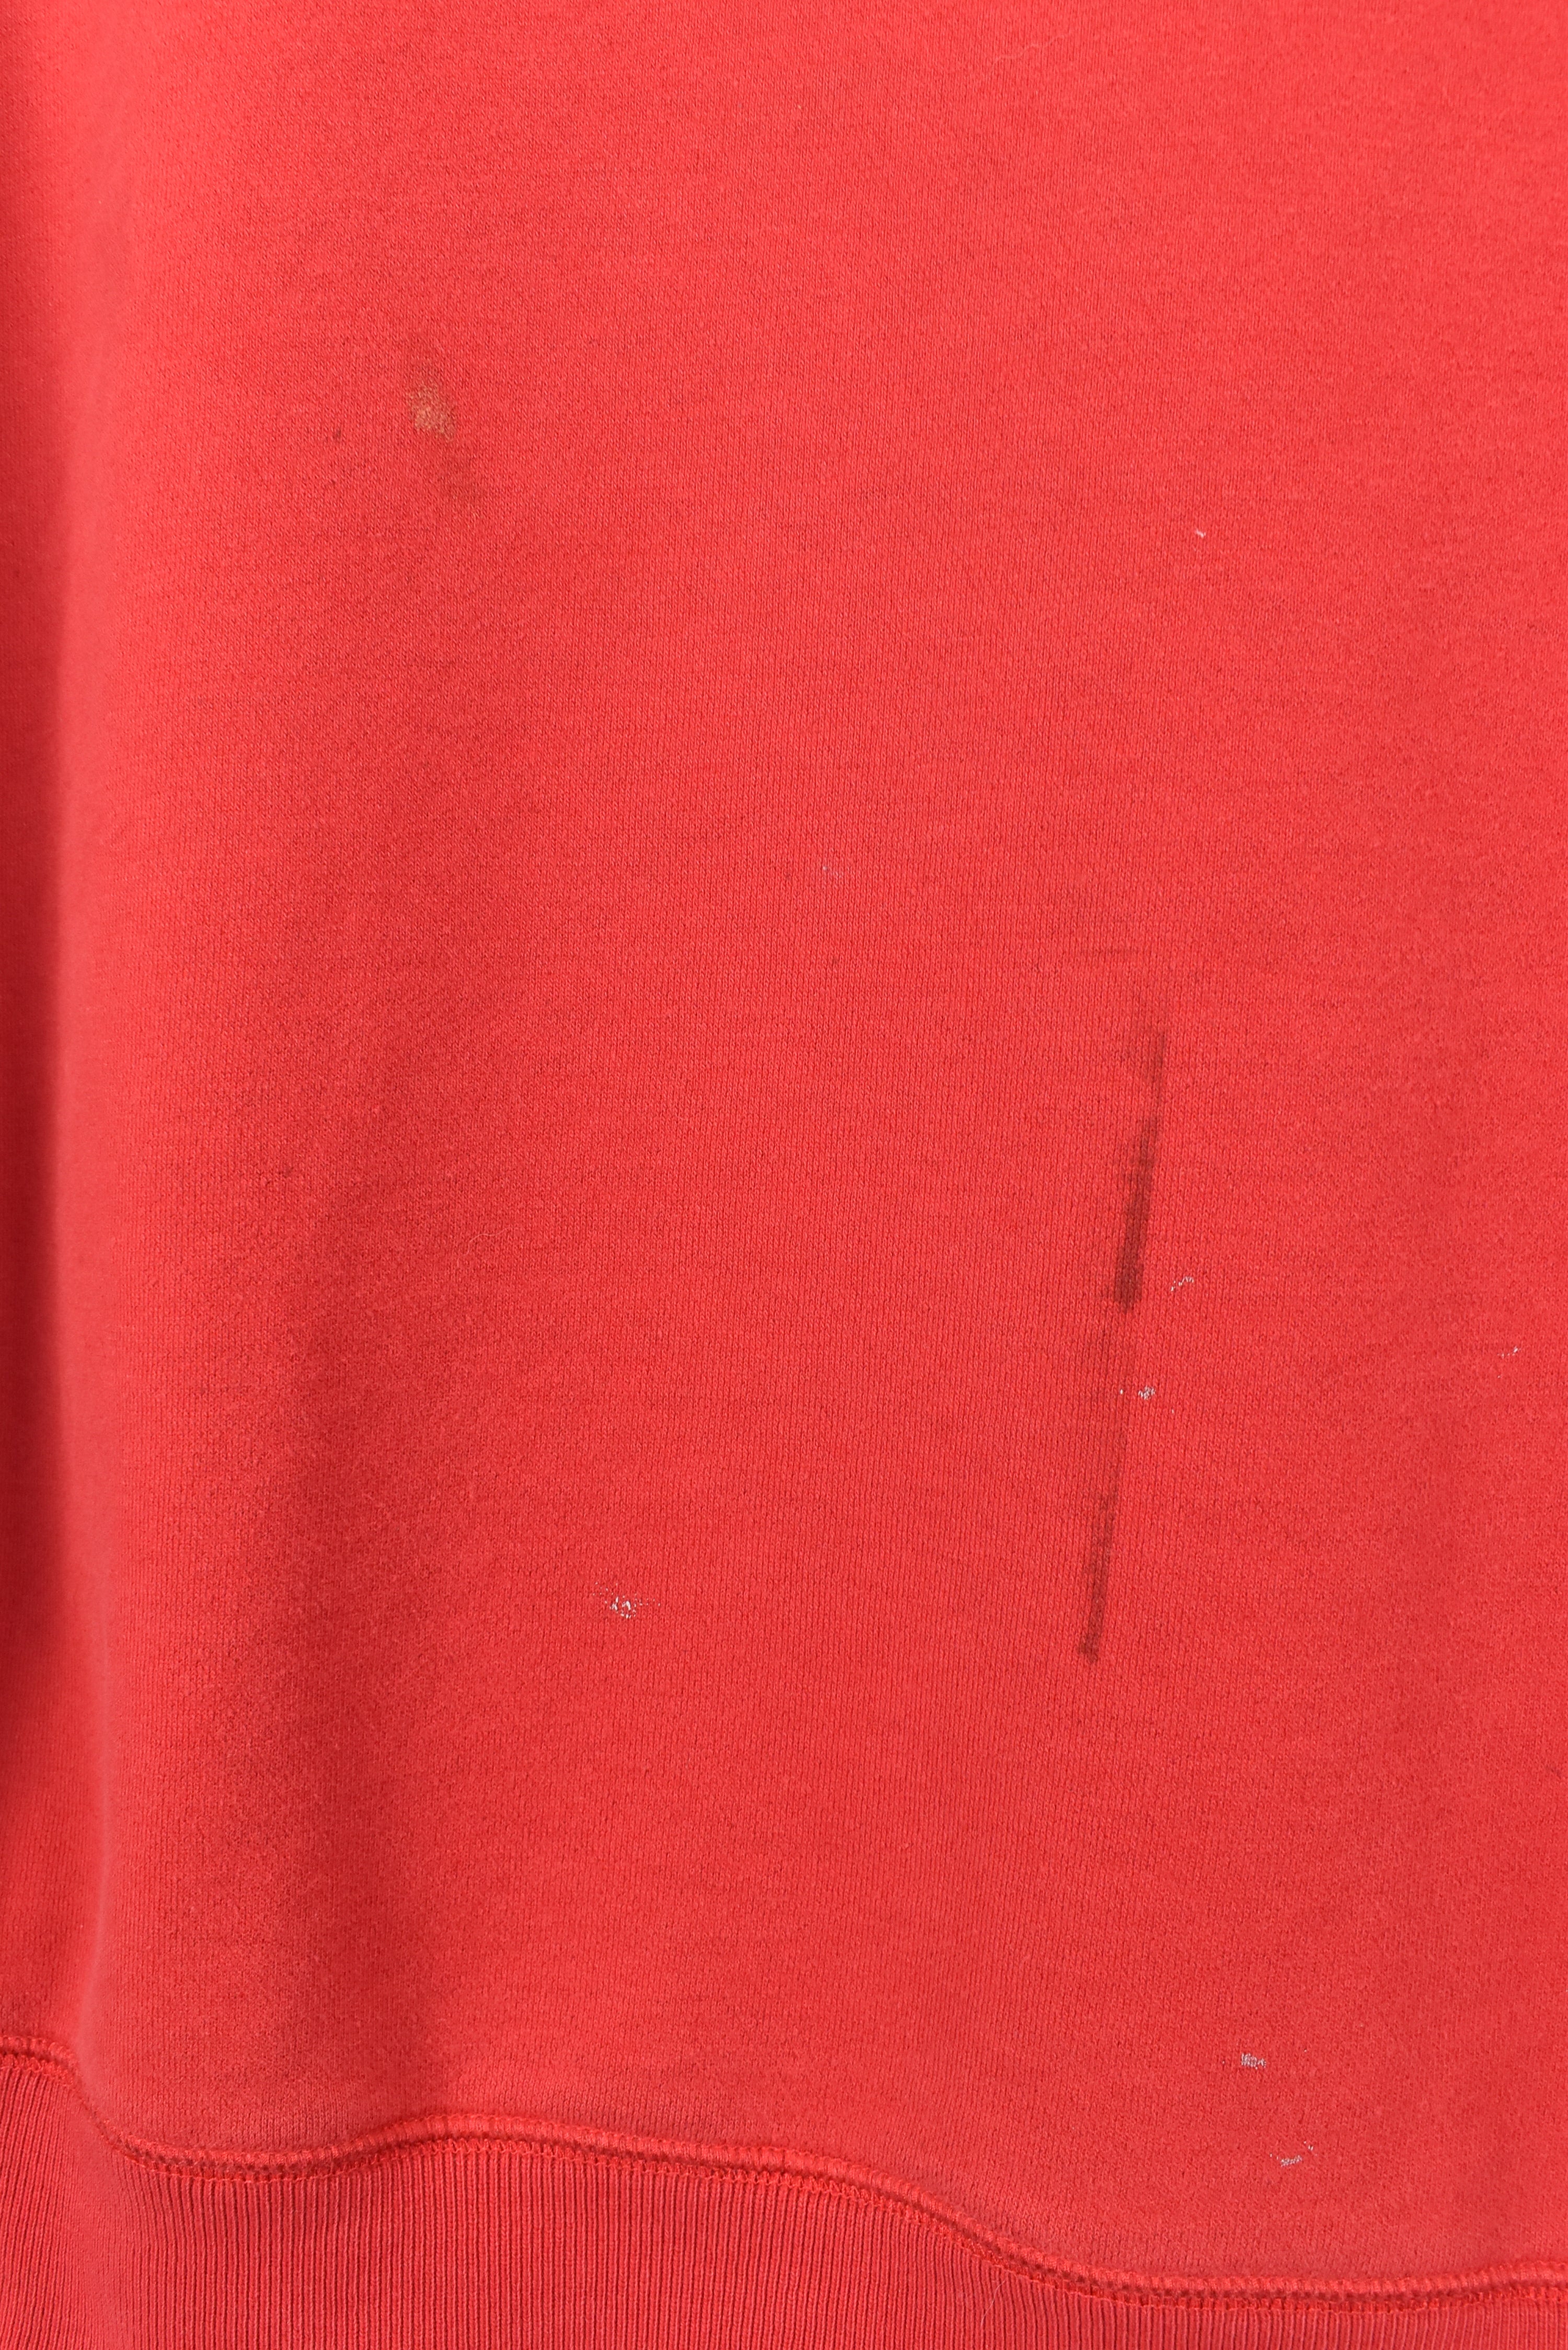 VINTAGE NAUTICA EMBROIDERED RED SWEATSHIRT | XL NAUTICA